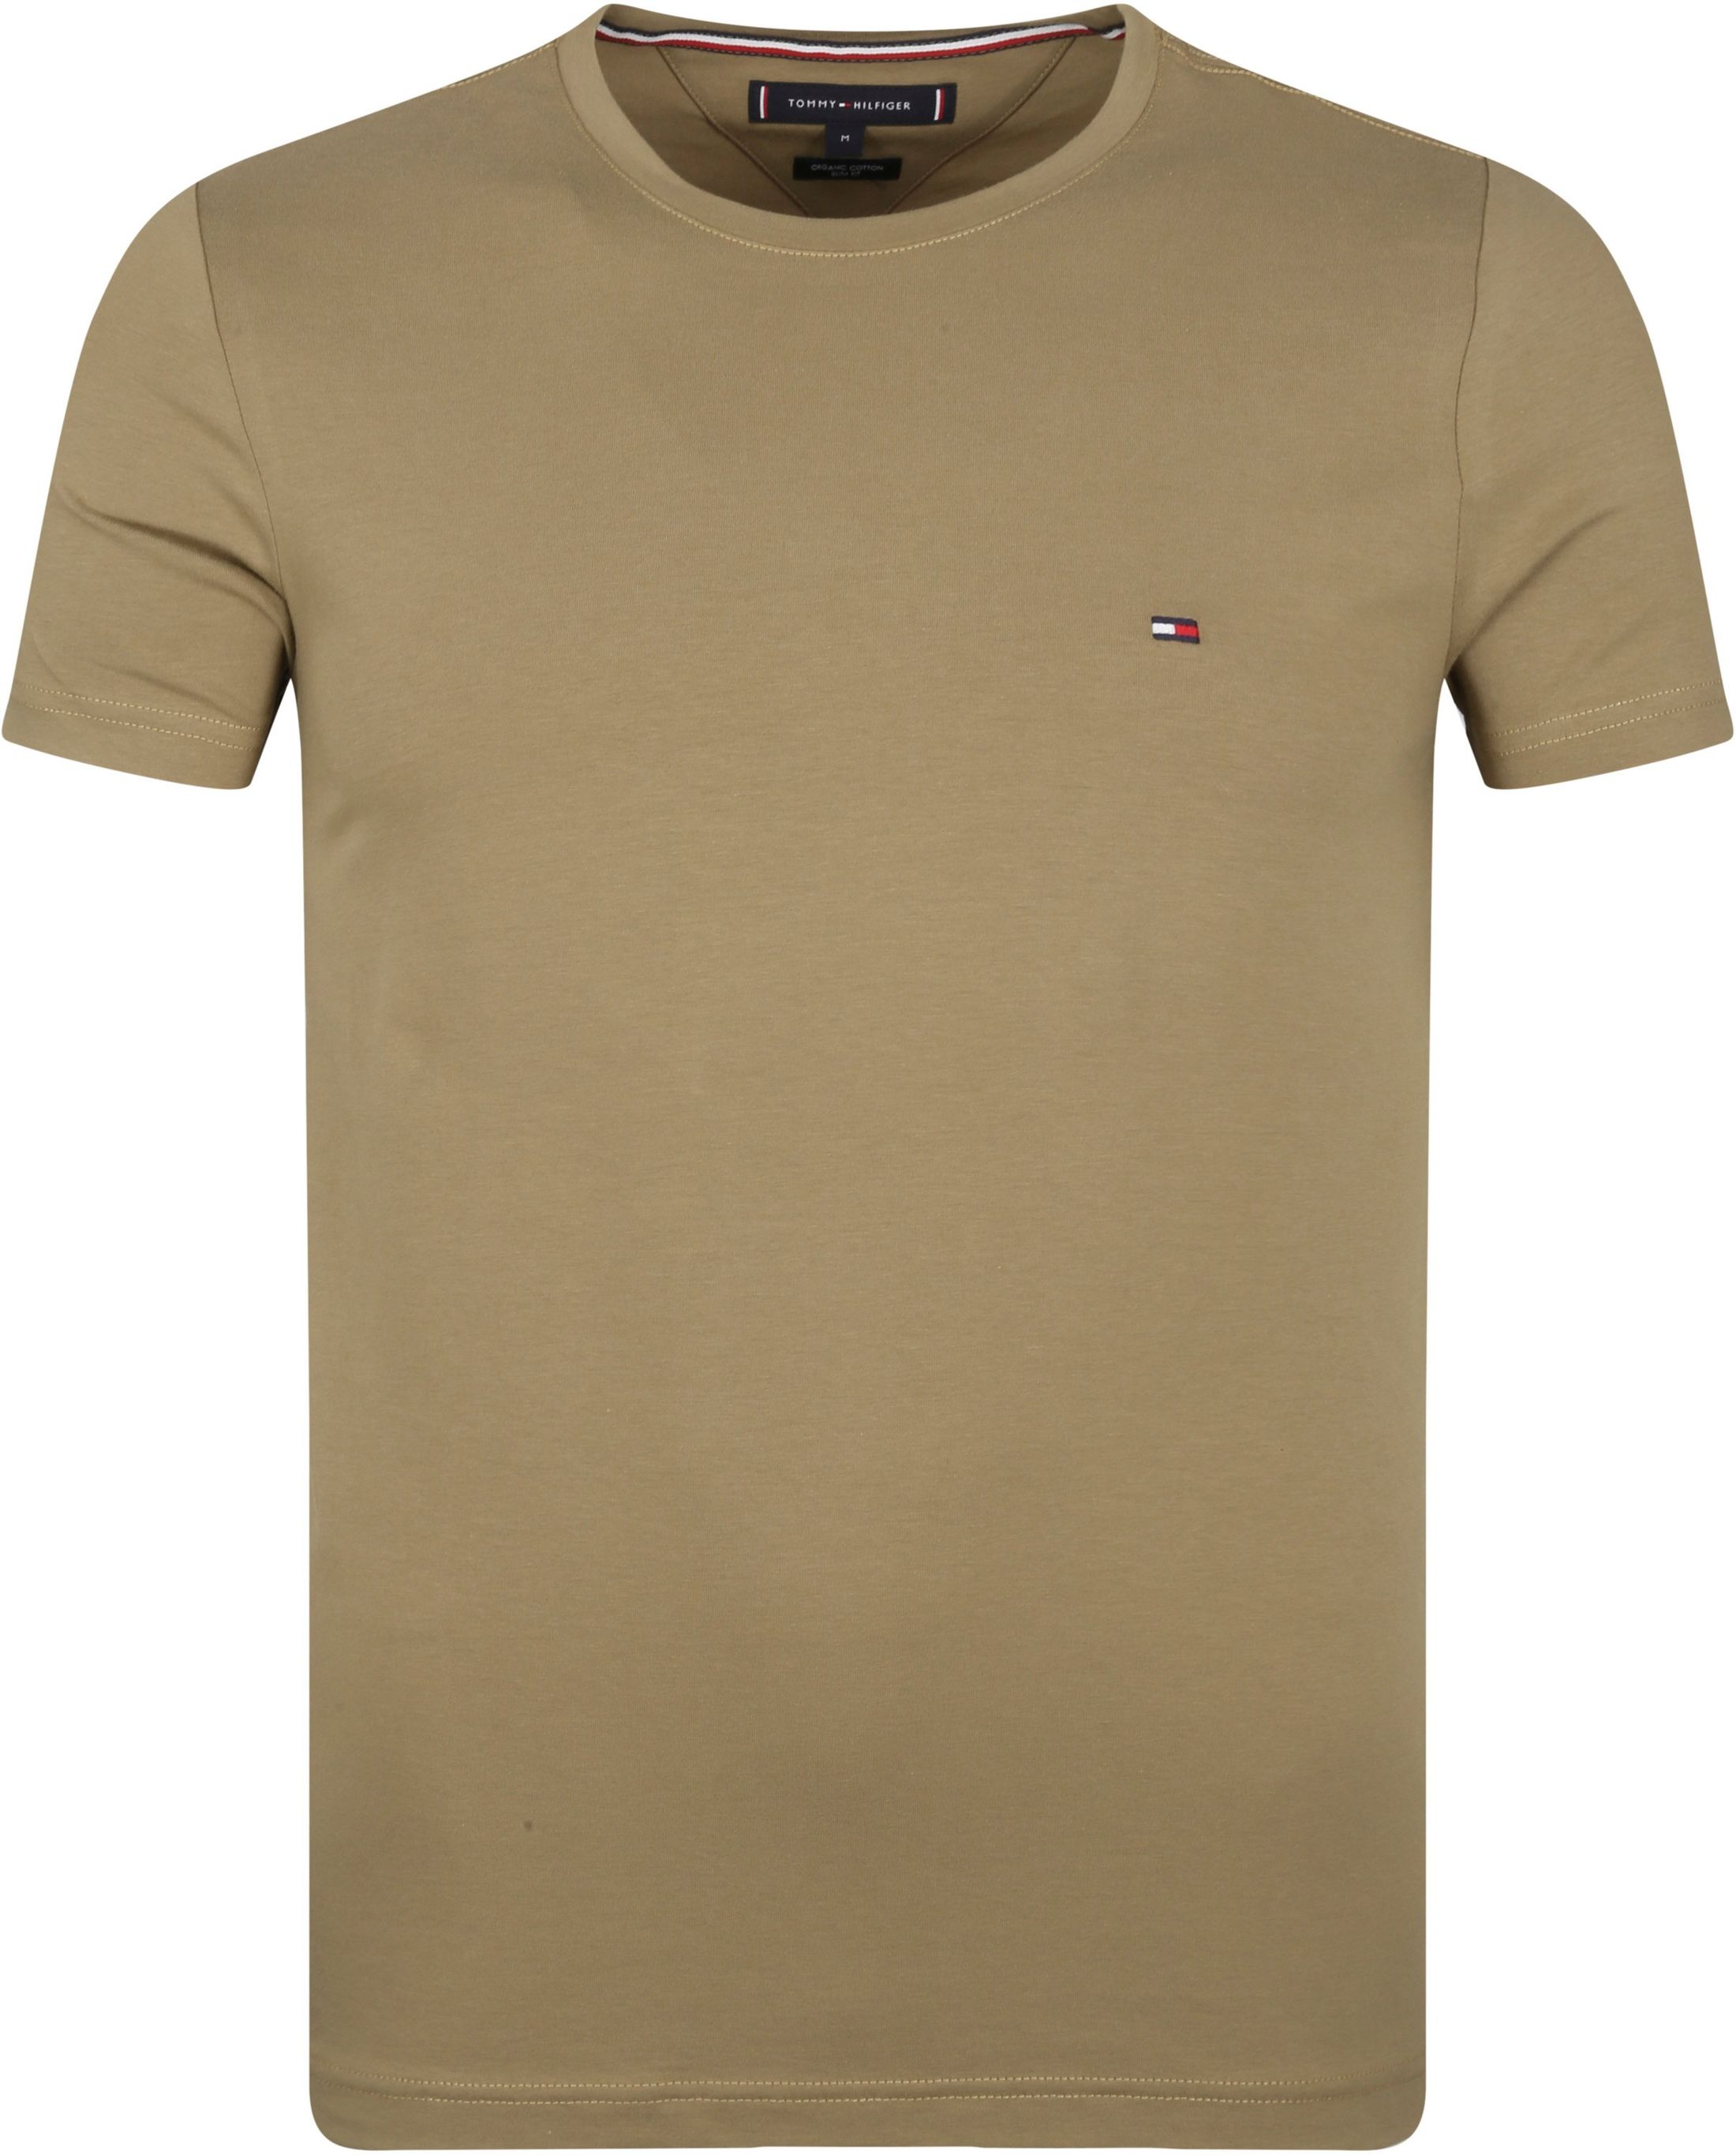 Tommy Hilfiger T-shirt Stretch Olive Green Khaki size L